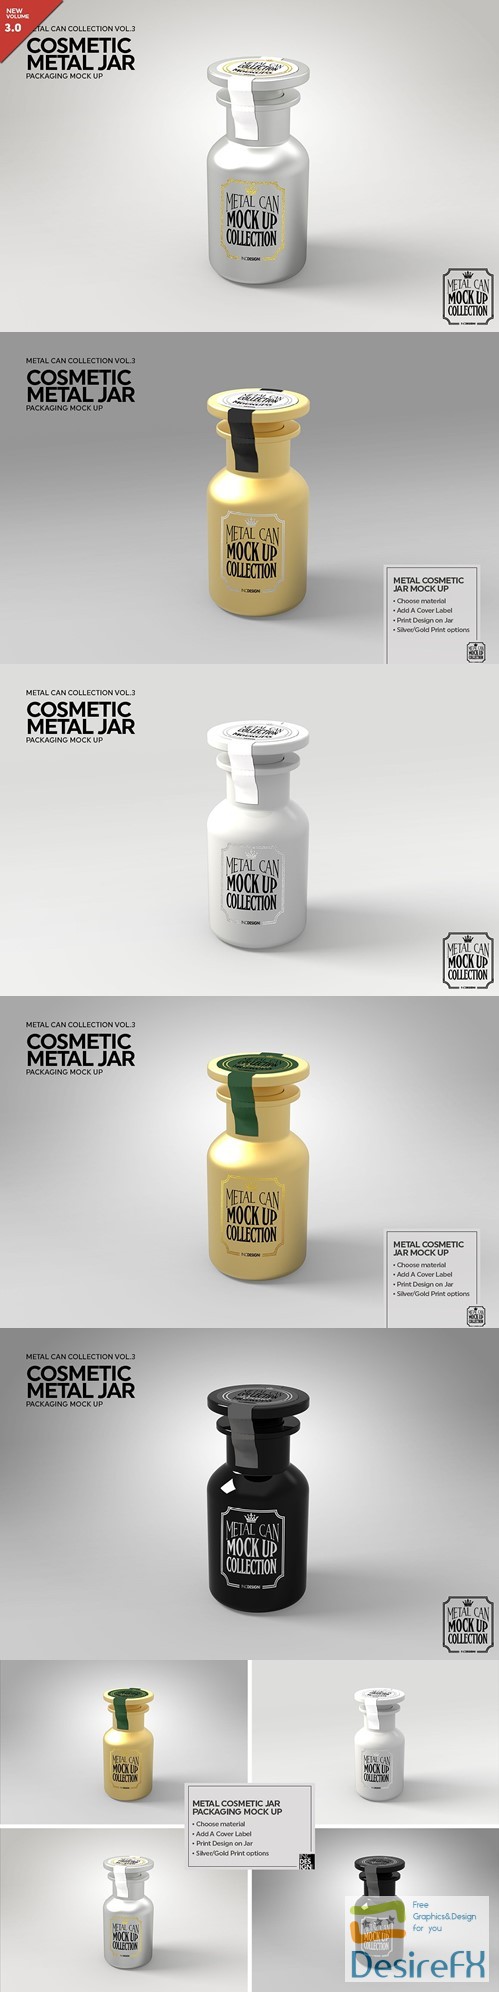 Cosmetic Metal Jar Mock Up 1928454